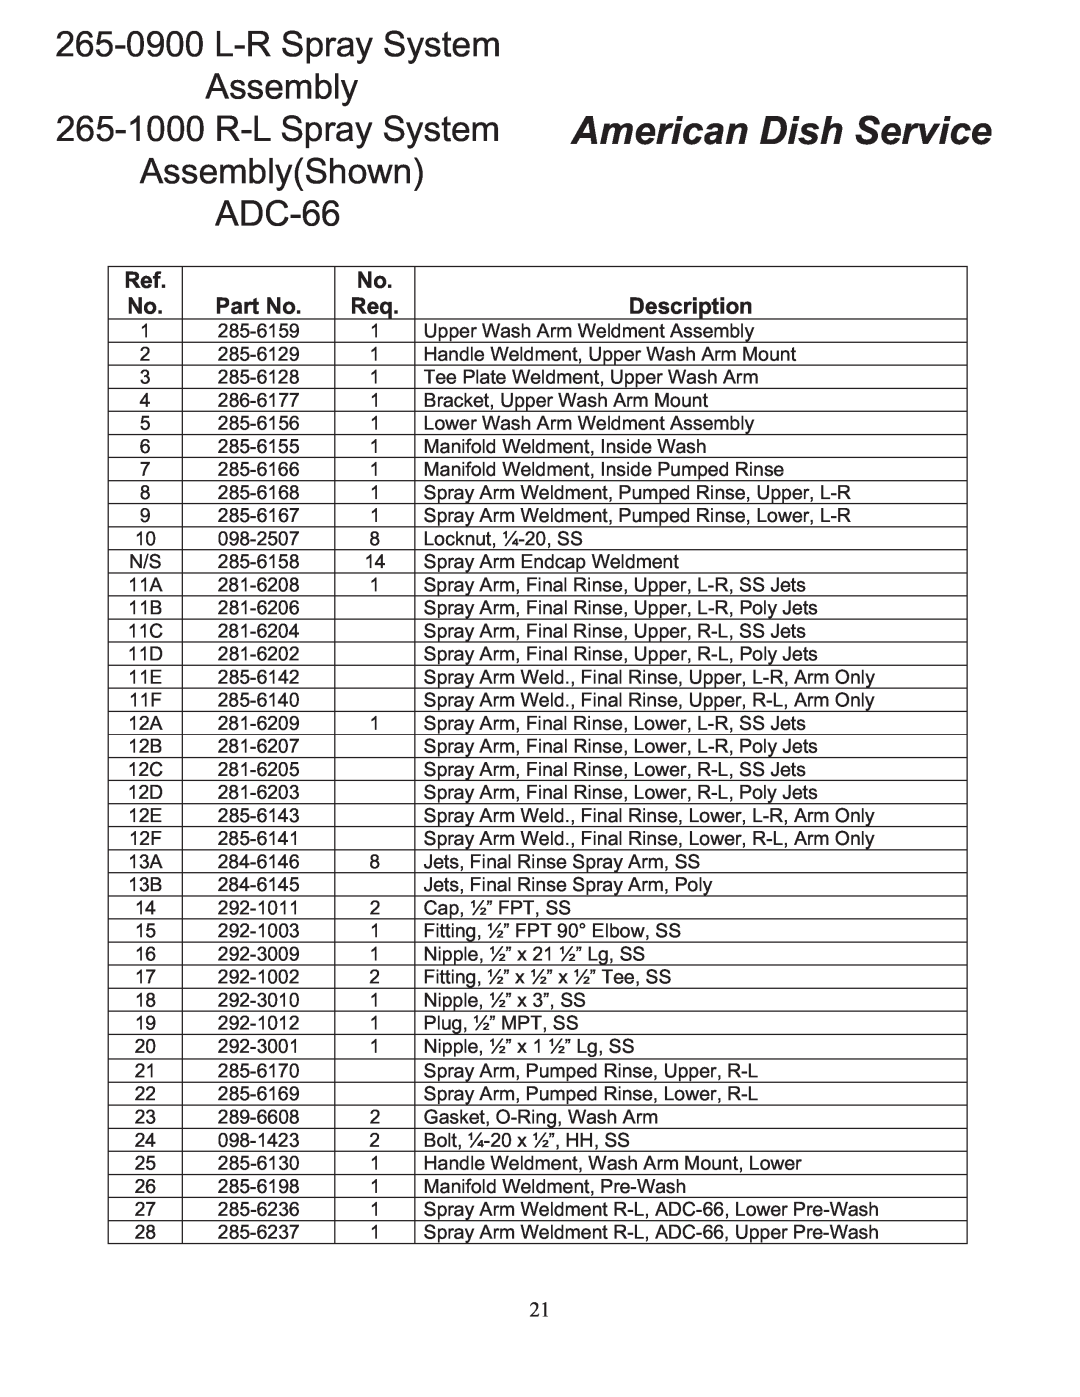 American Dish Service ADC-66 L-R/R-L L-RSpray System Assembly, R-LSpray System American Dish Service, AssemblyShown ADC-66 